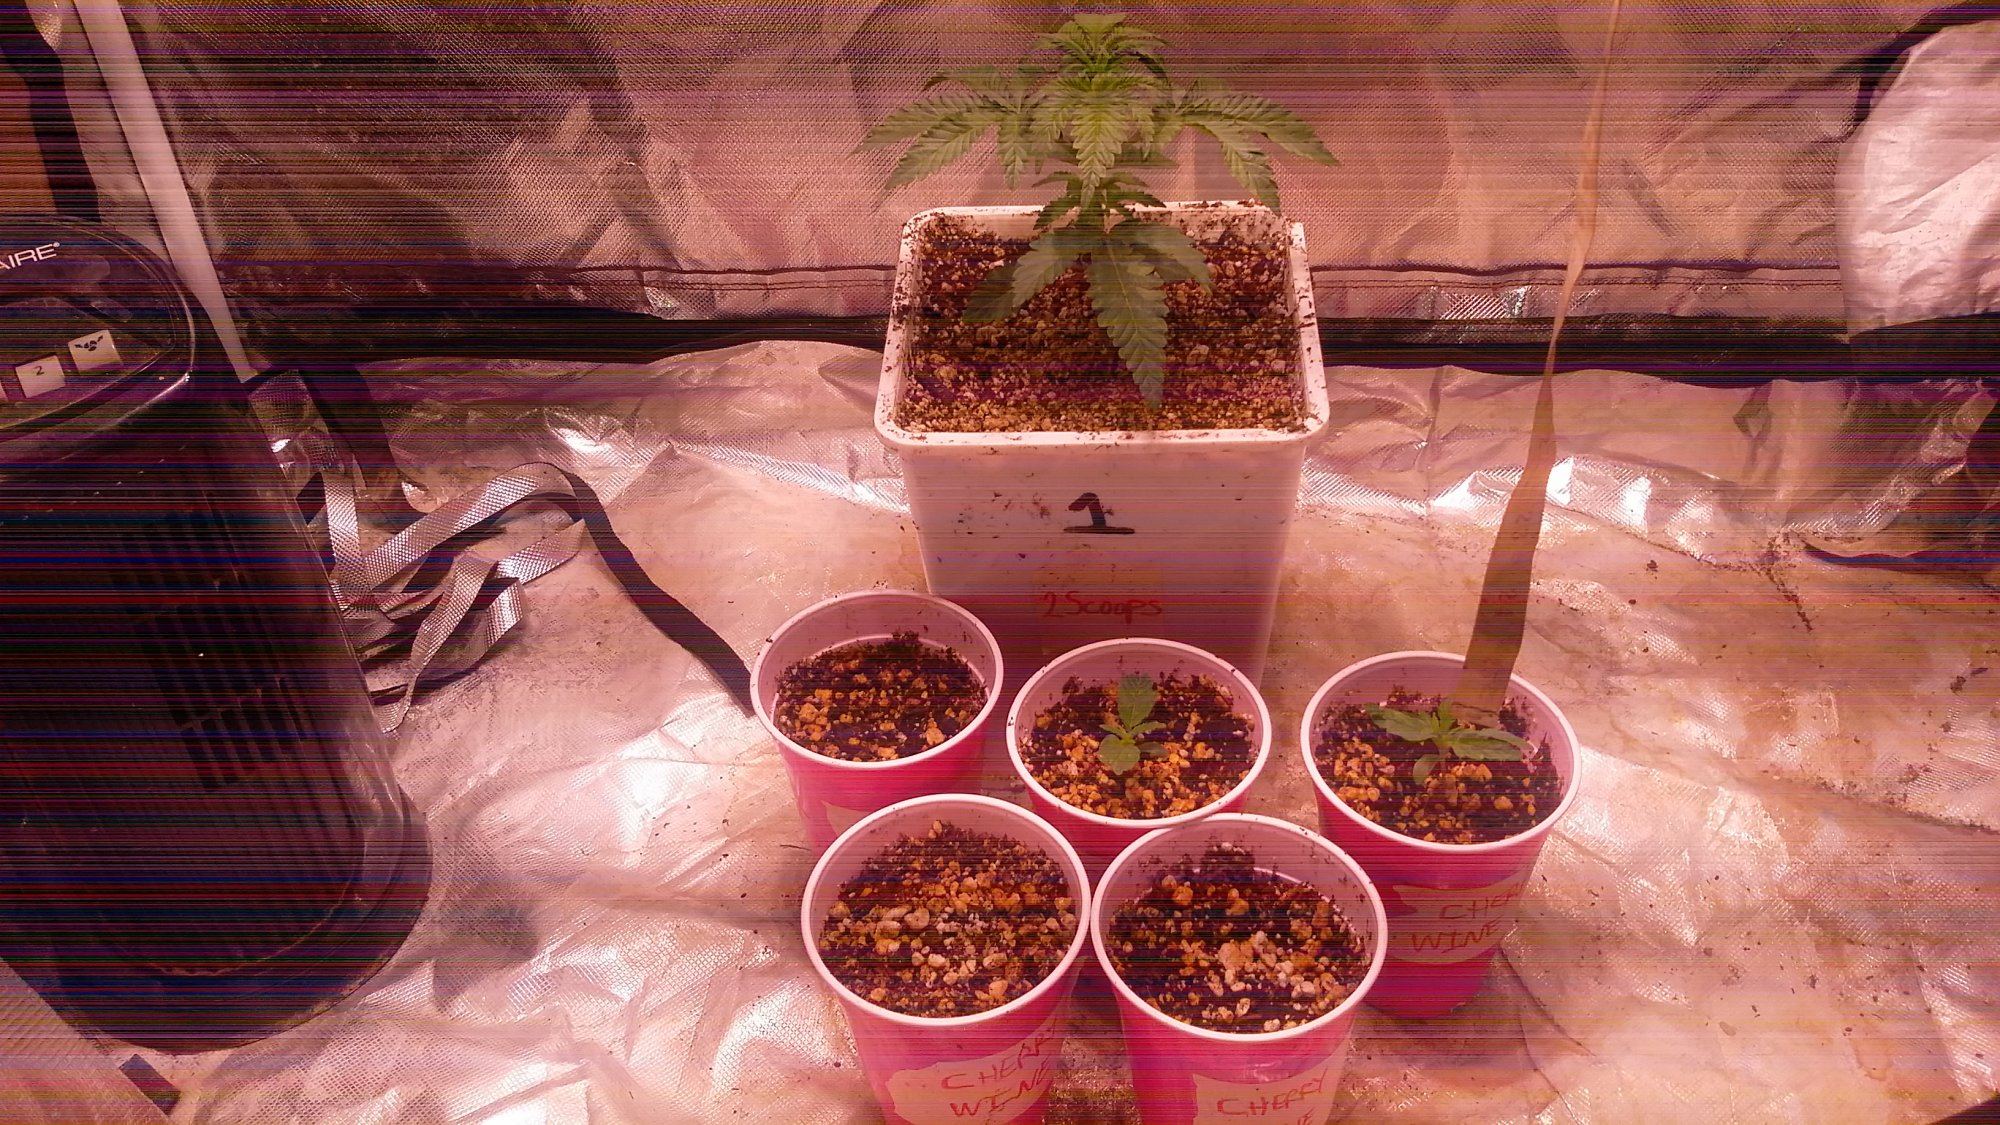 Cross breeding hemp with marijuana